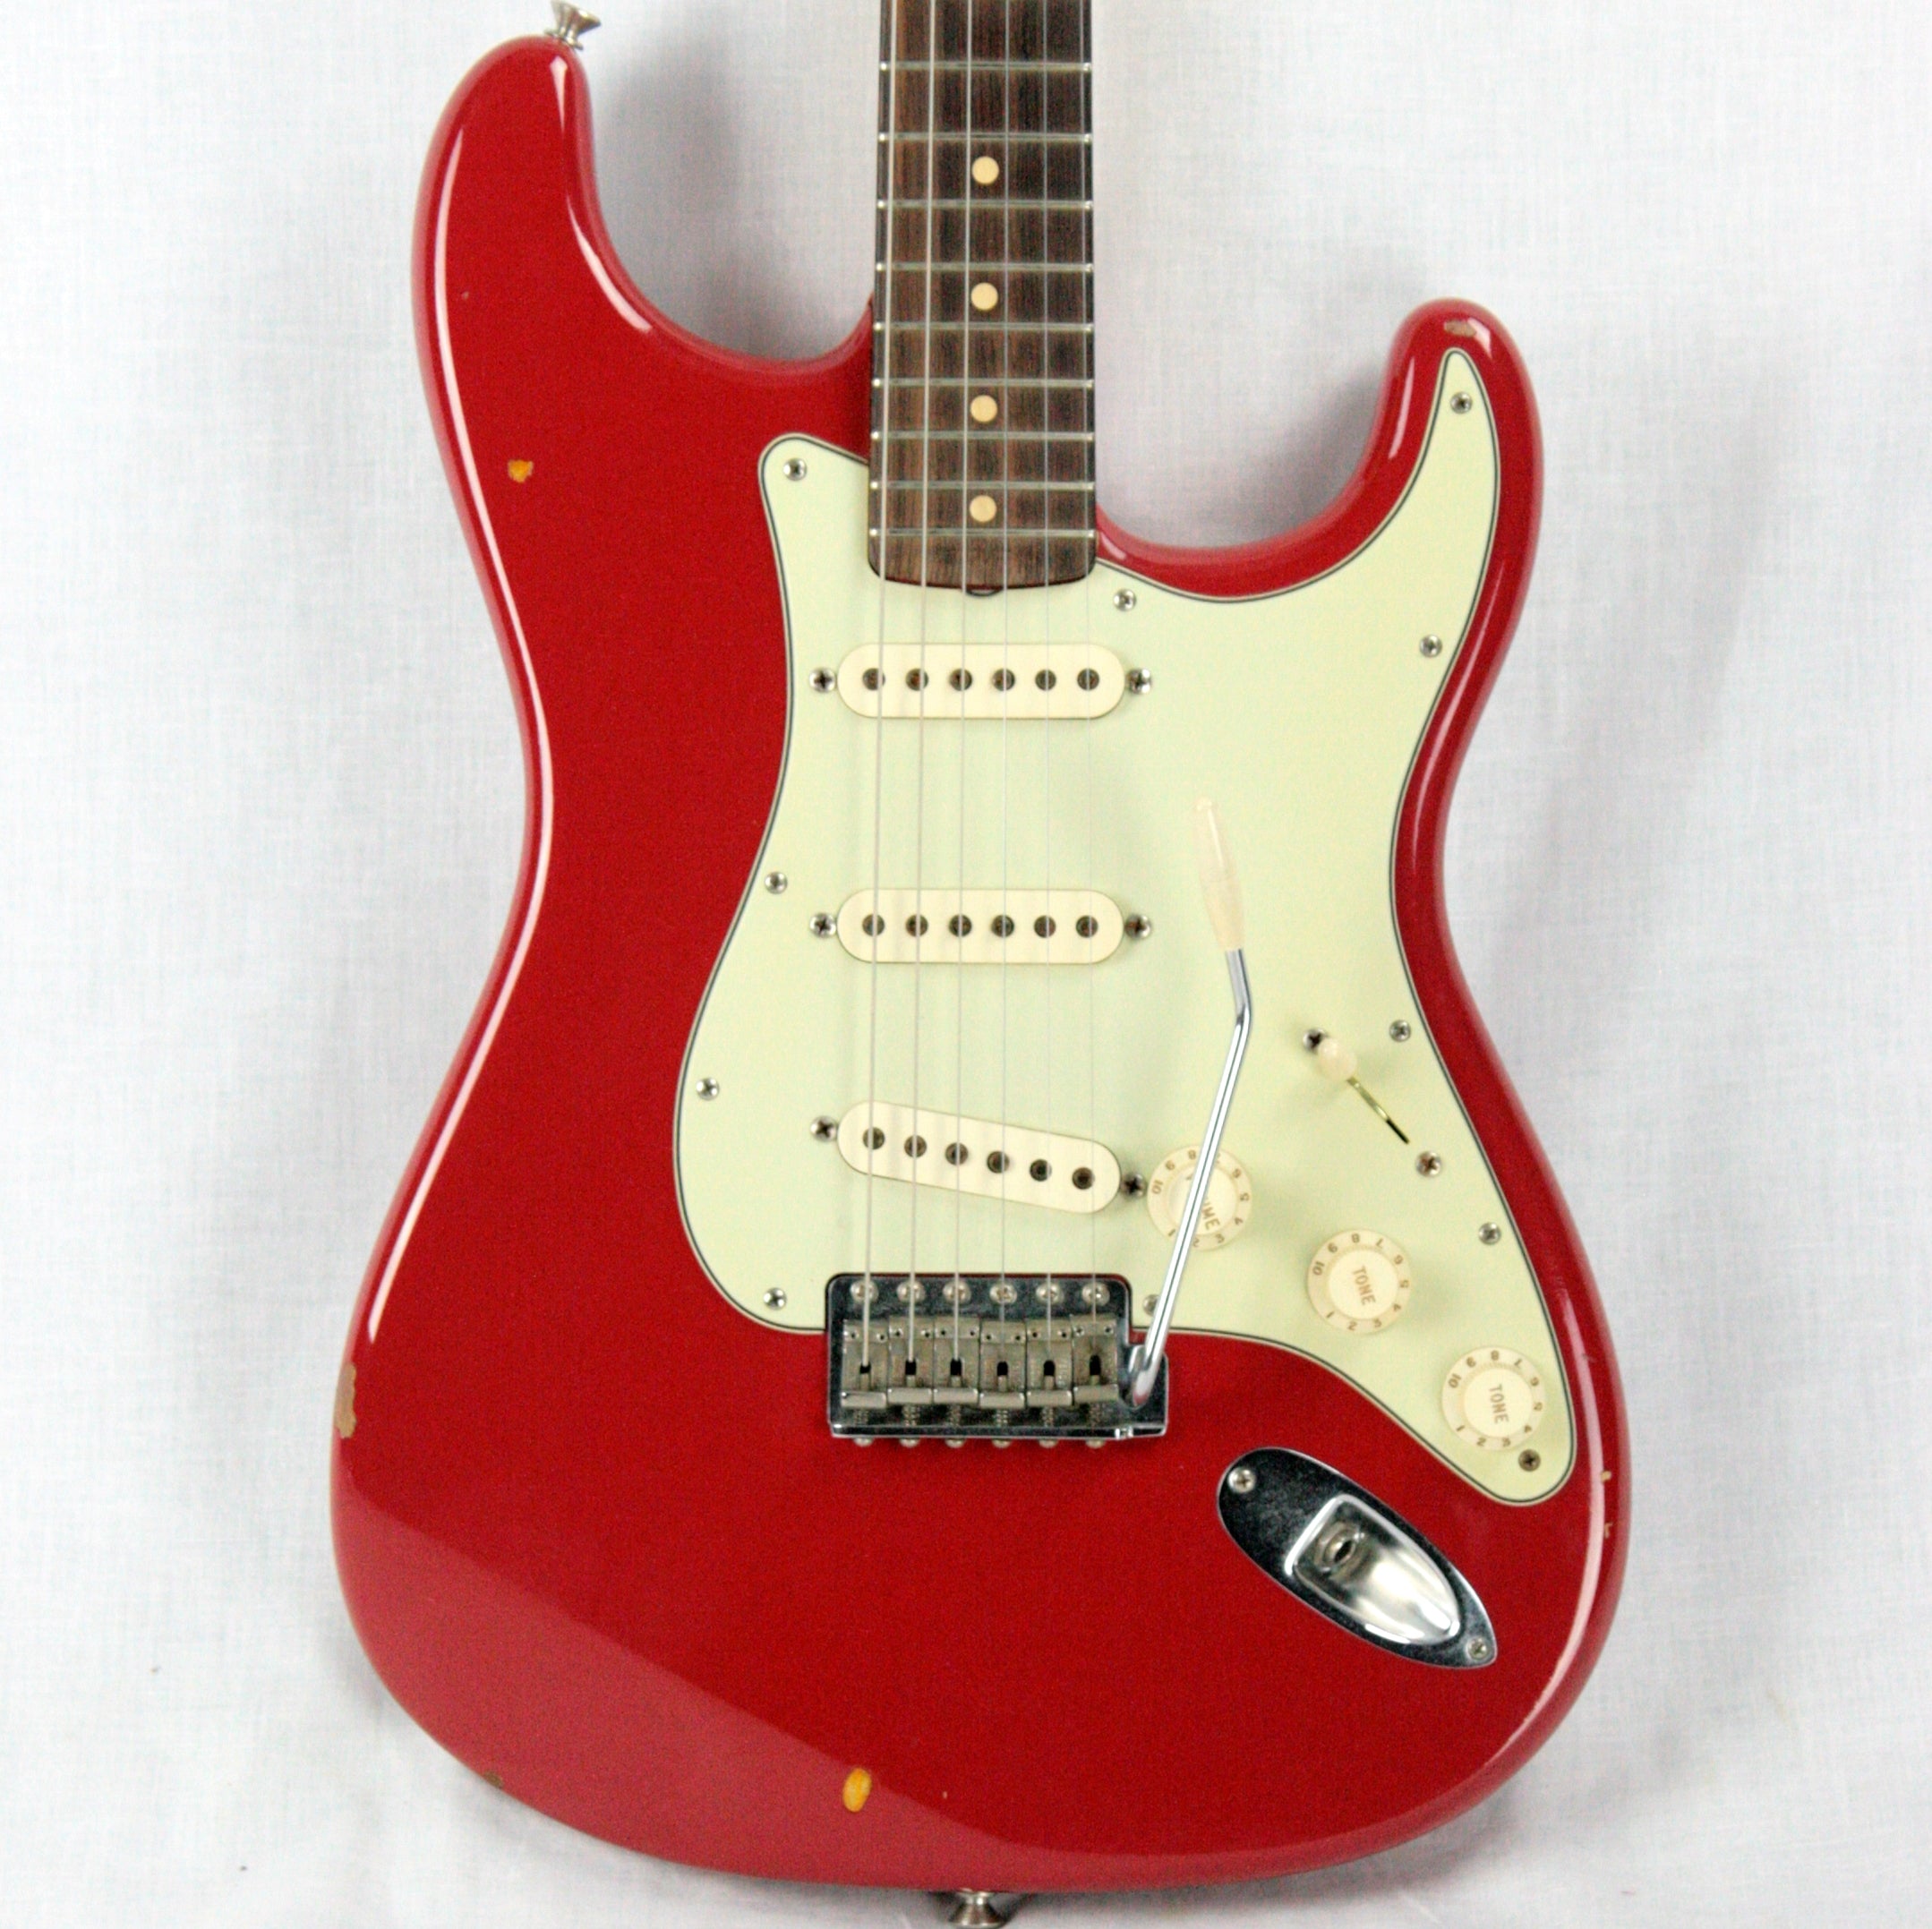 Fender Stratocaster in Dakota Red with Mint Green Pickguard